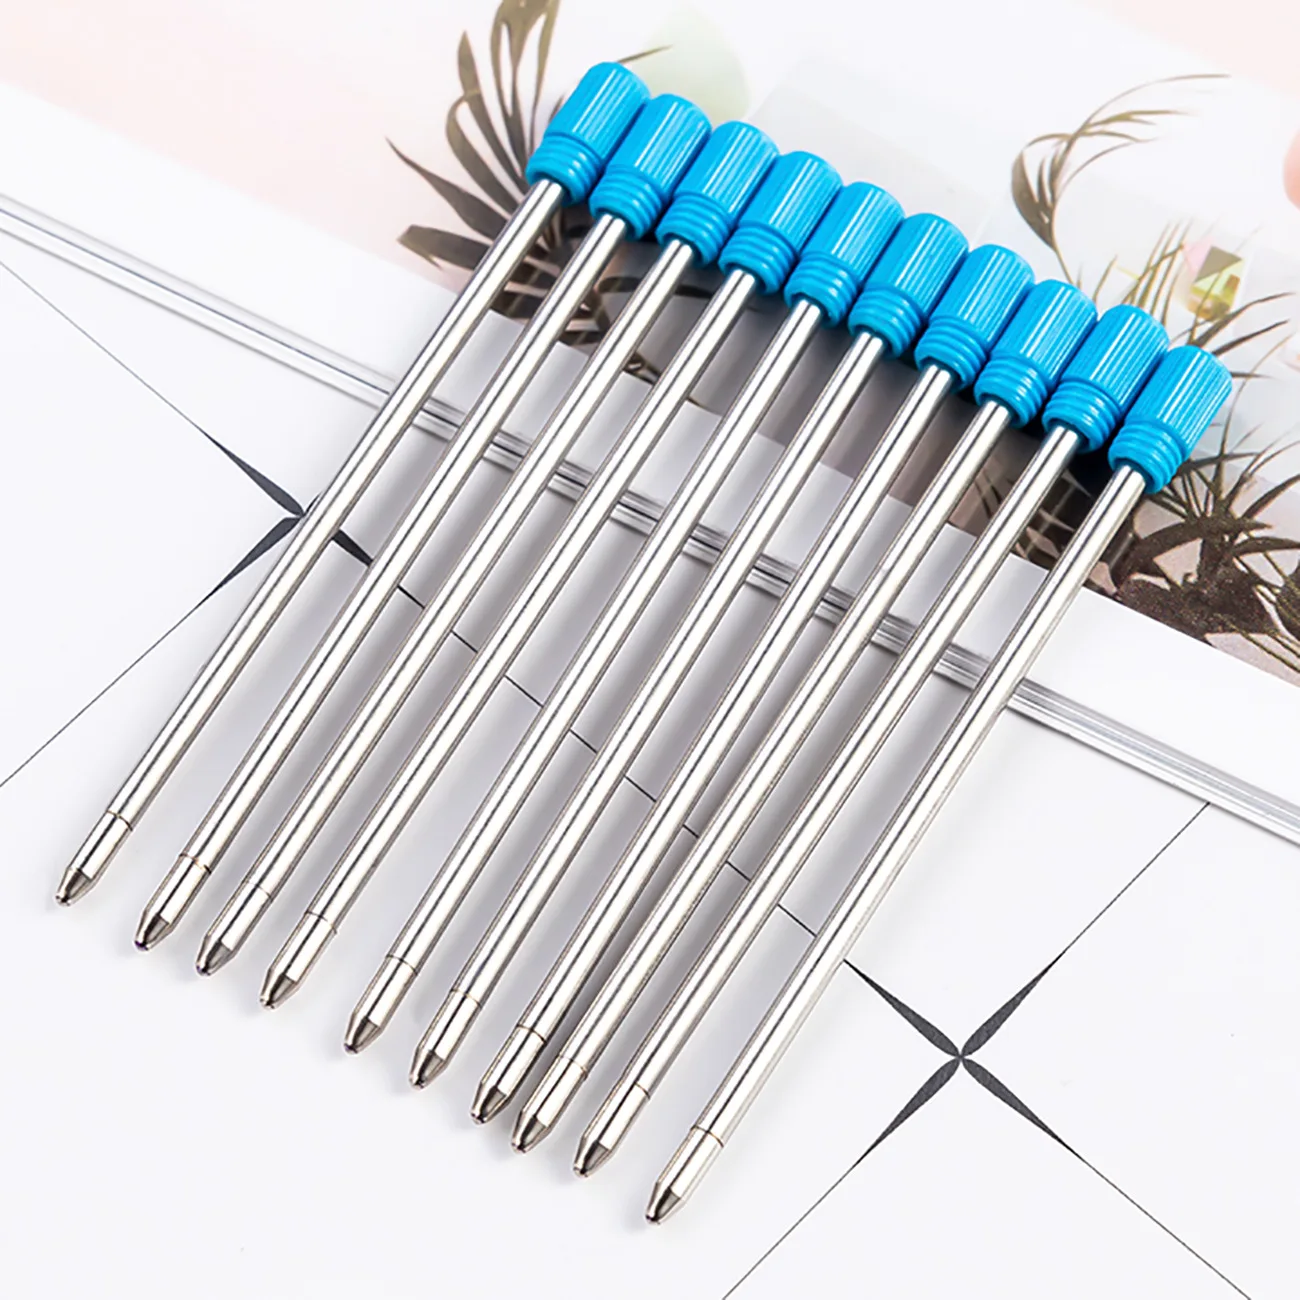 

20 pcs/lot Metal pen refill for Crystal Diamond Ballpoint pen student pen rod cartridge core black blue color 7cm length